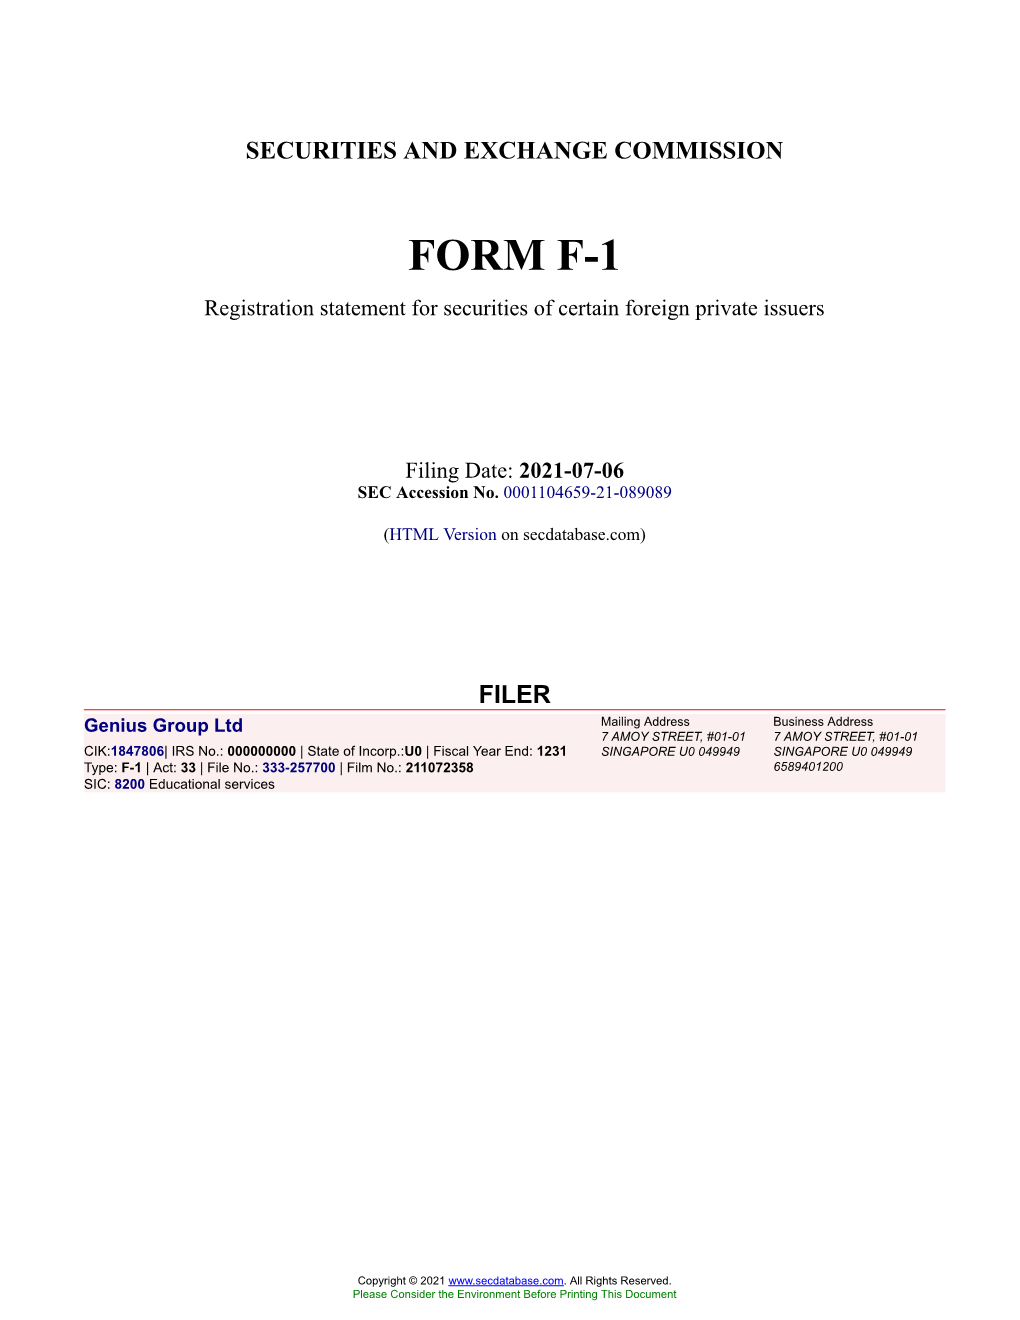 Genius Group Ltd Form F-1 Filed 2021-07-06